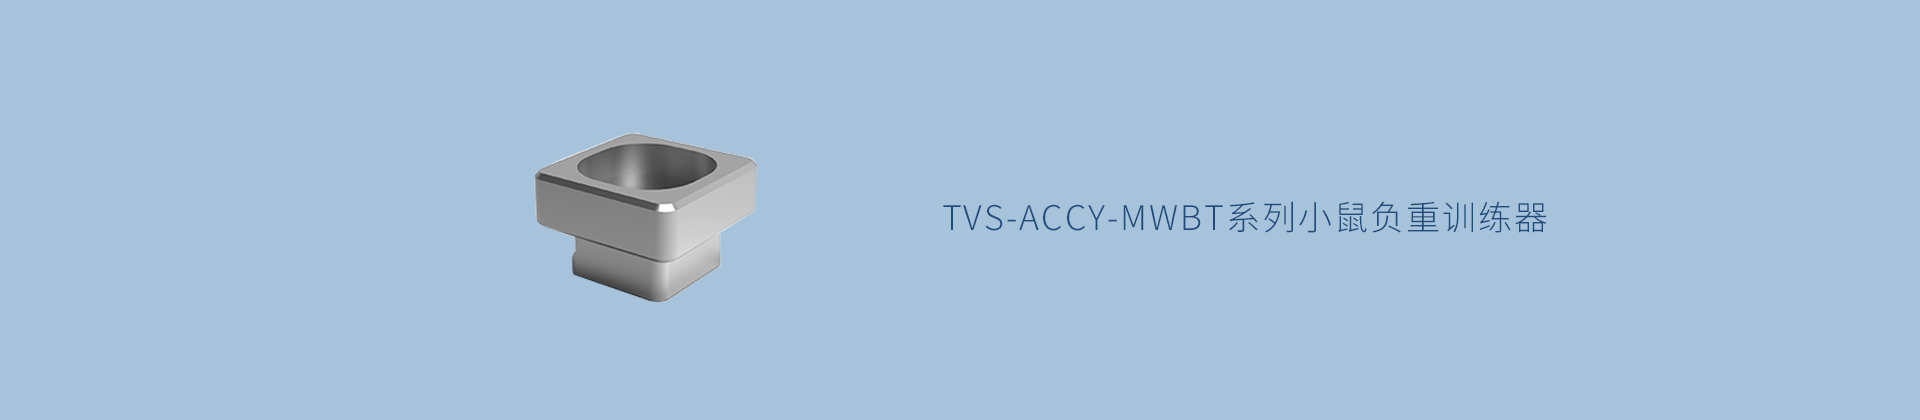 TVS-ACCY-MWBT系列小鼠负重训练器